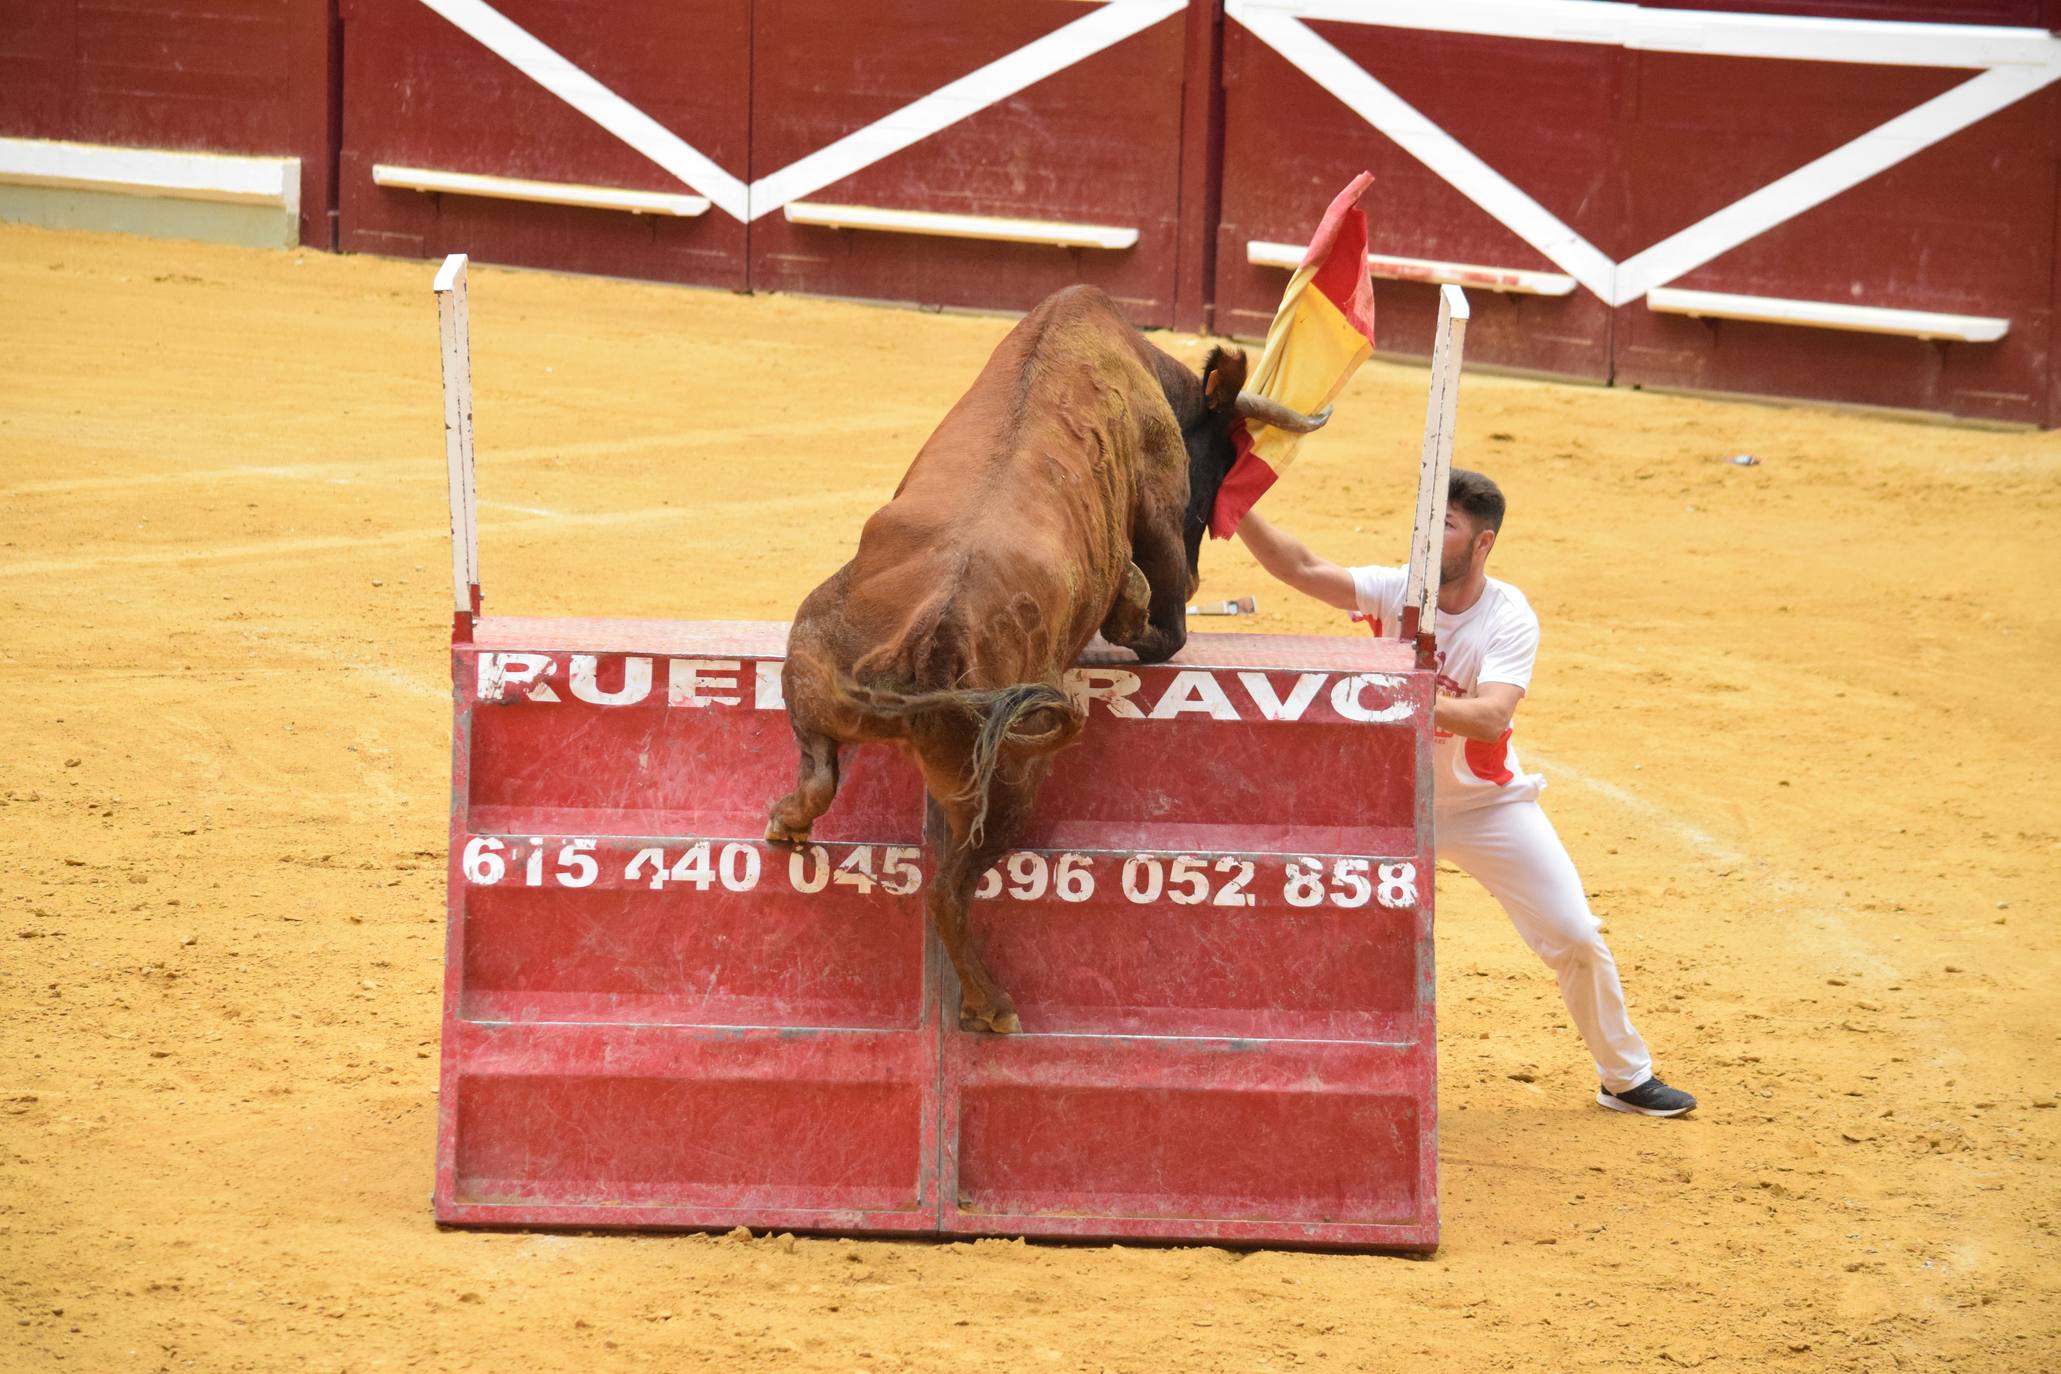 Miércoles de vaquillas en La Ribera